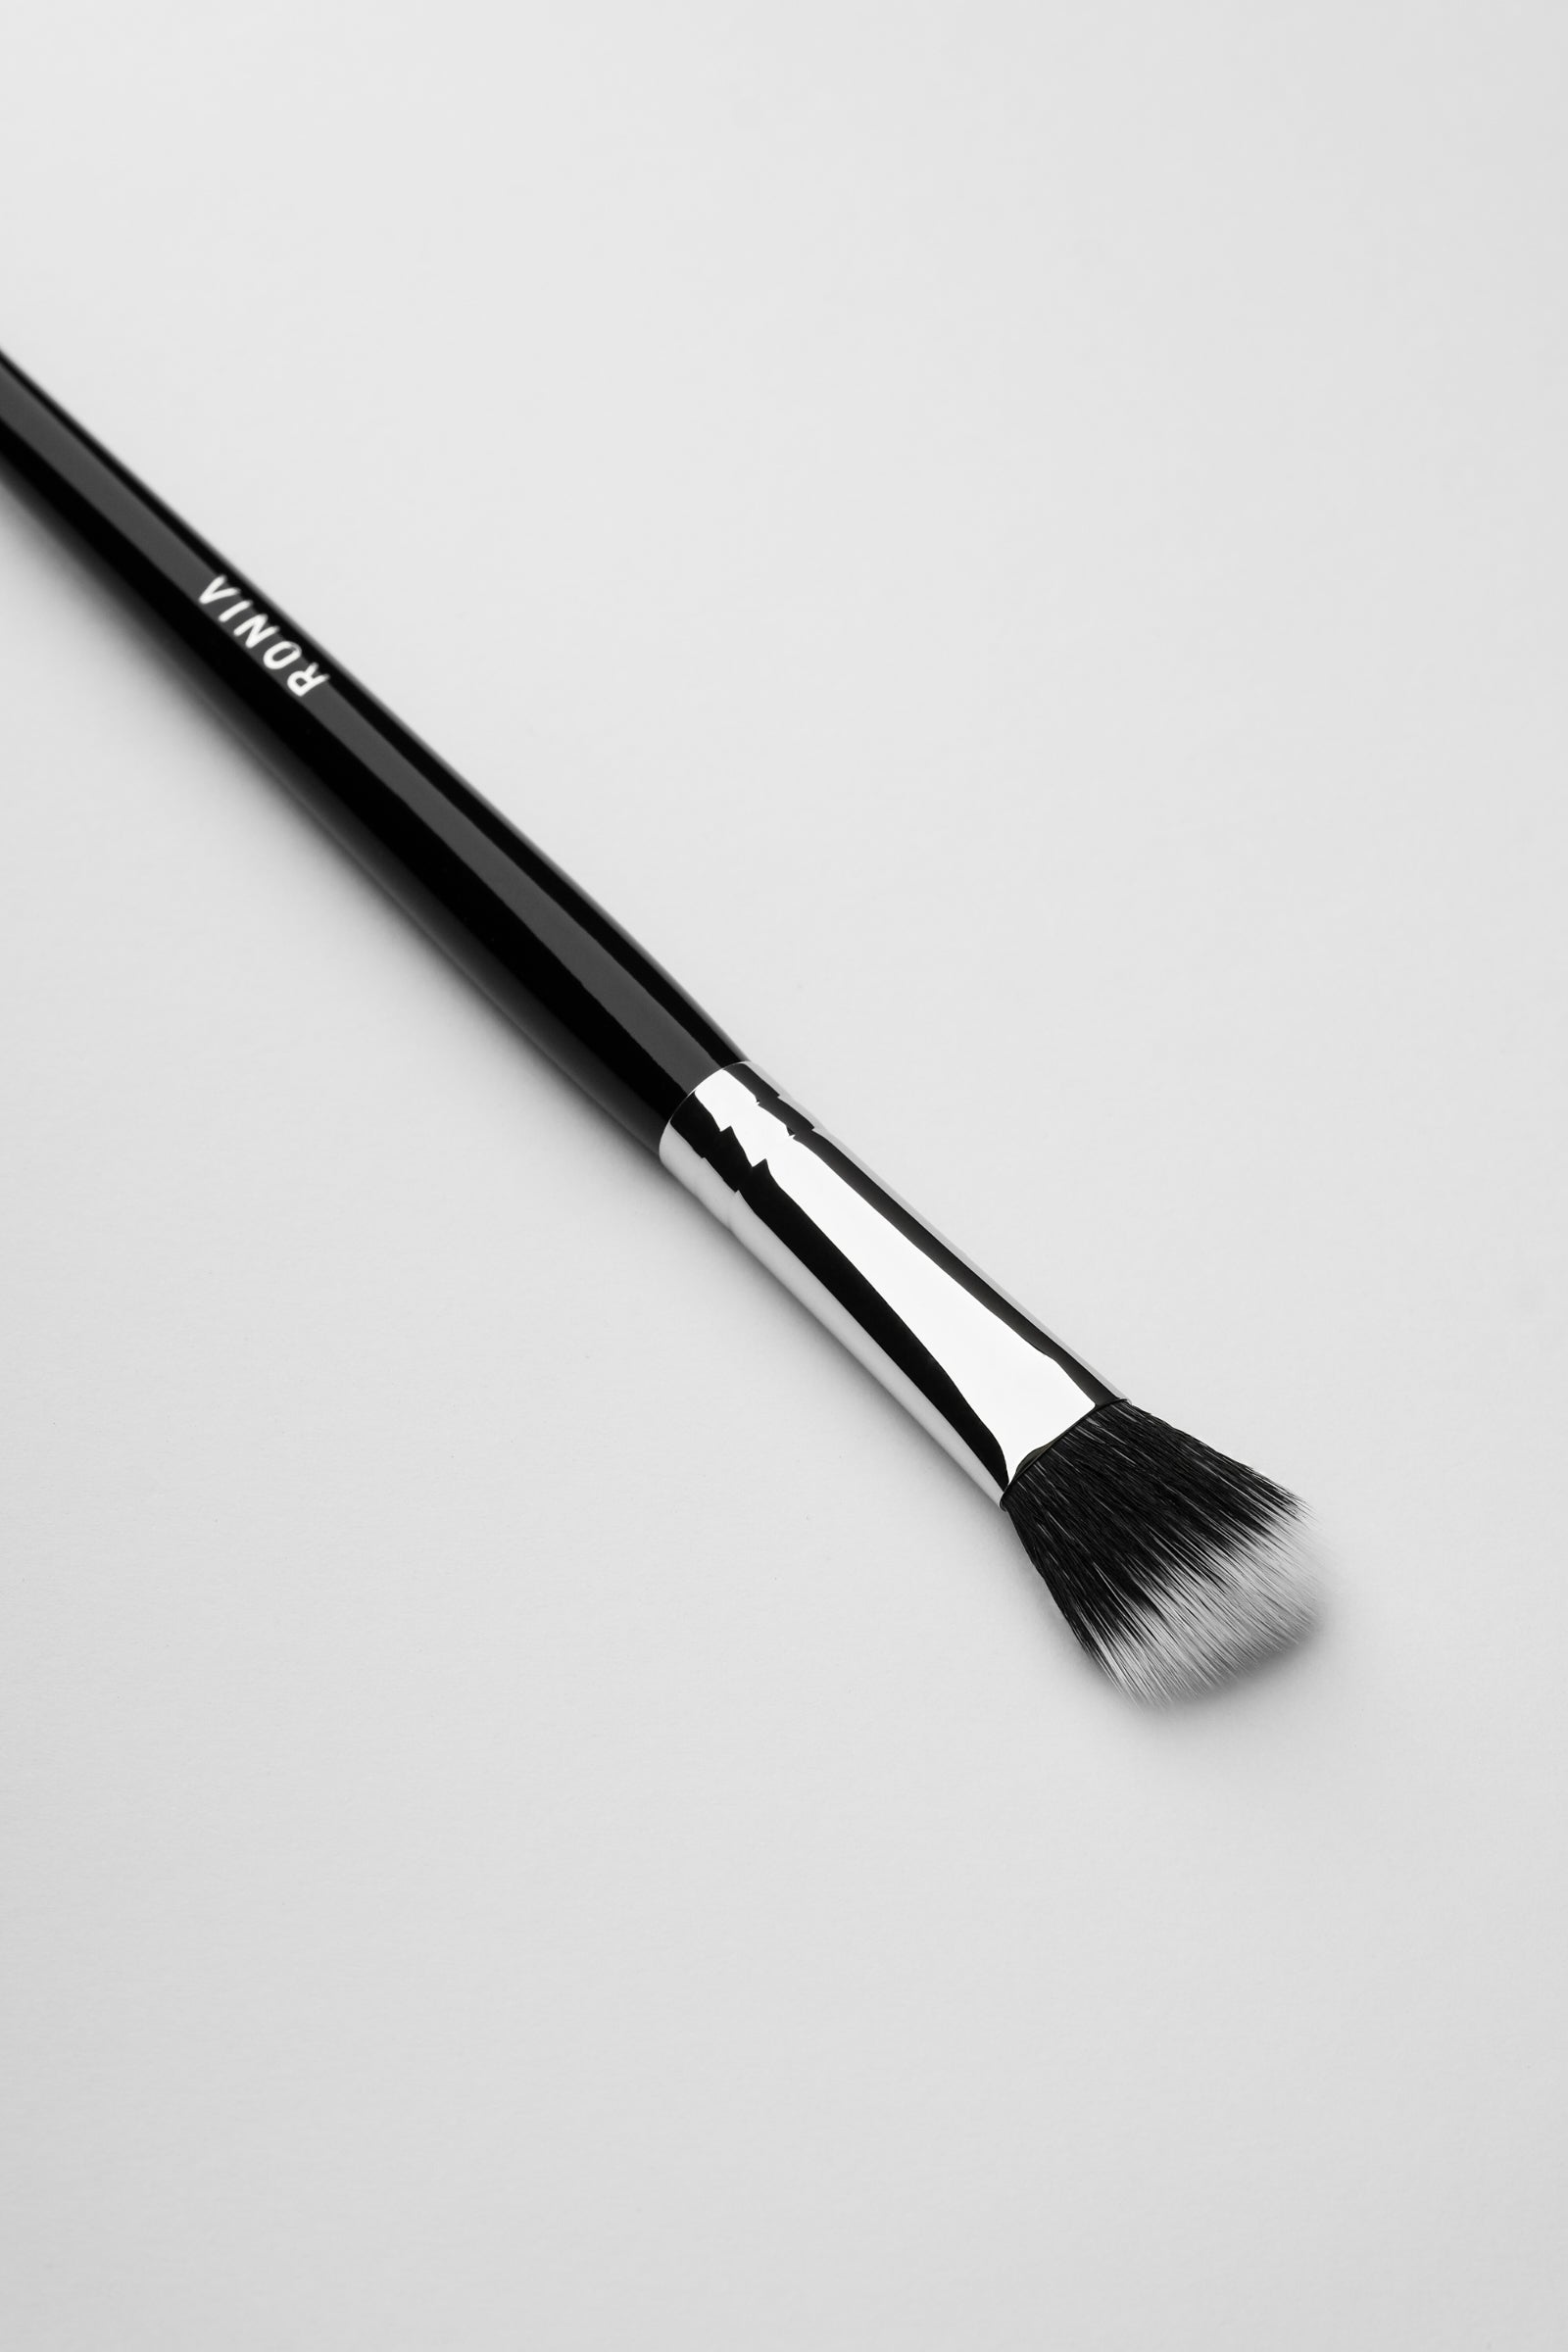 Foundation makeup brush